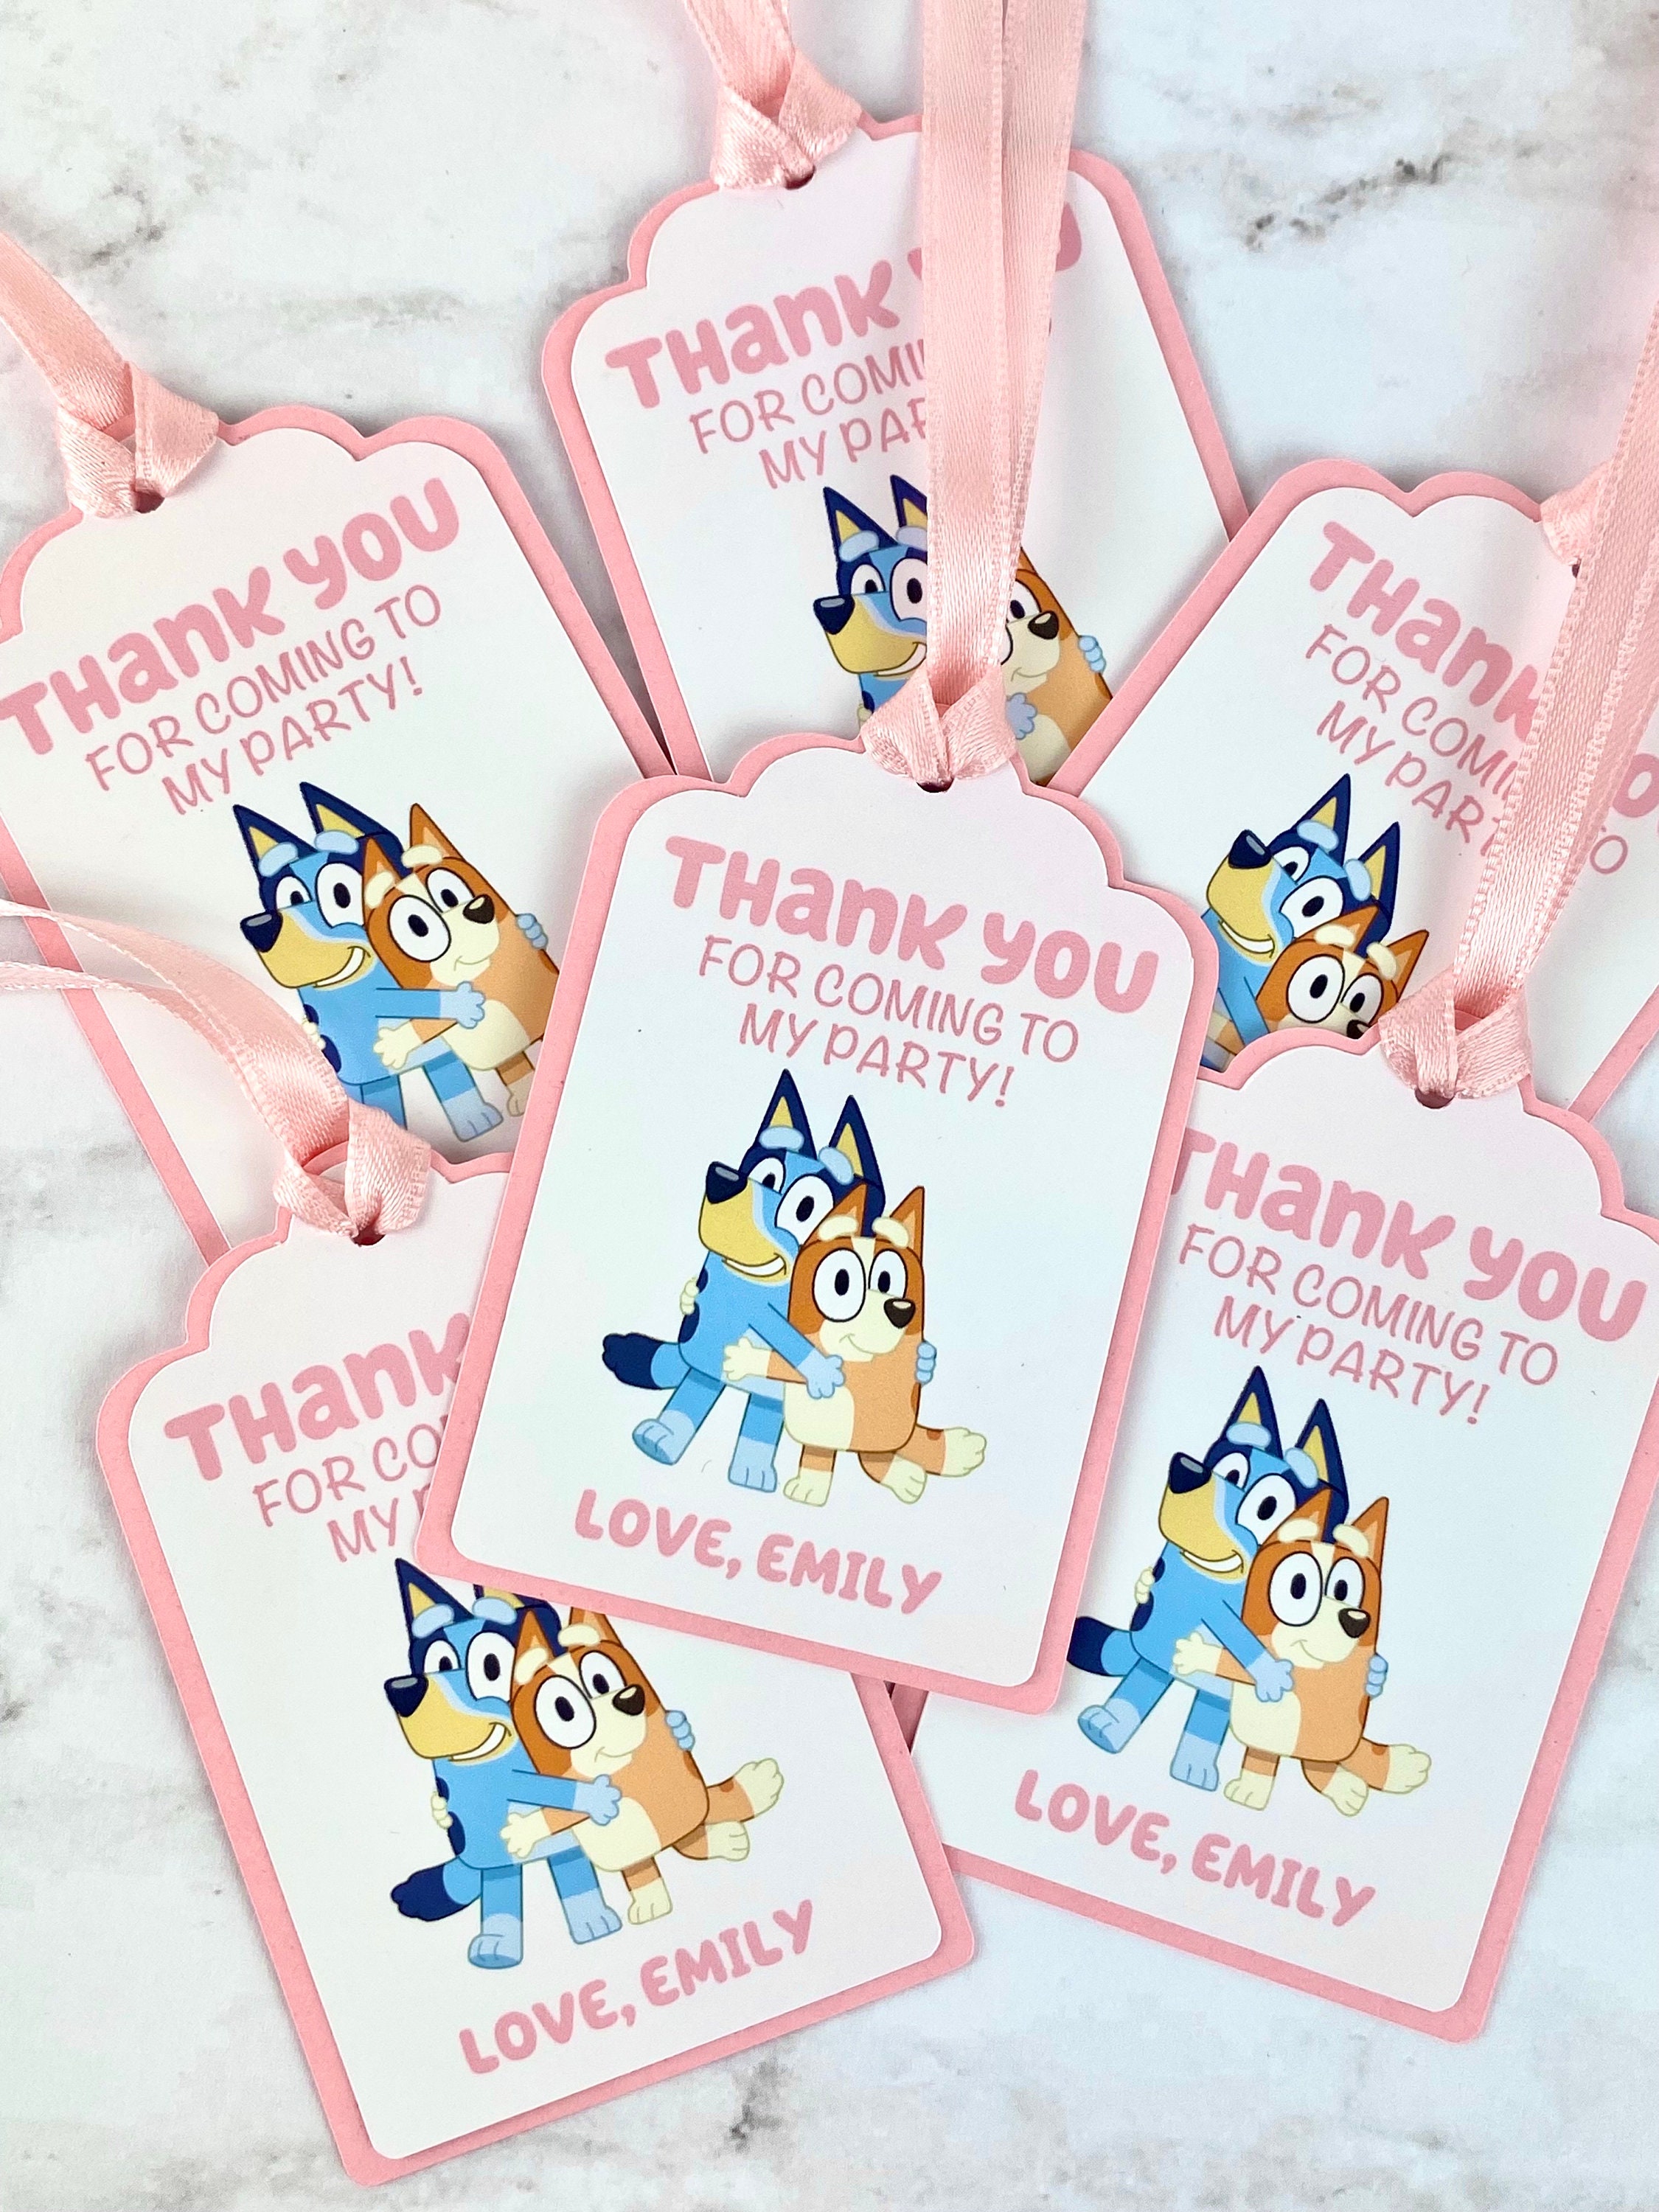 25 Bluey Stickers party favors classroom rewards 2.5 blue heeler dog